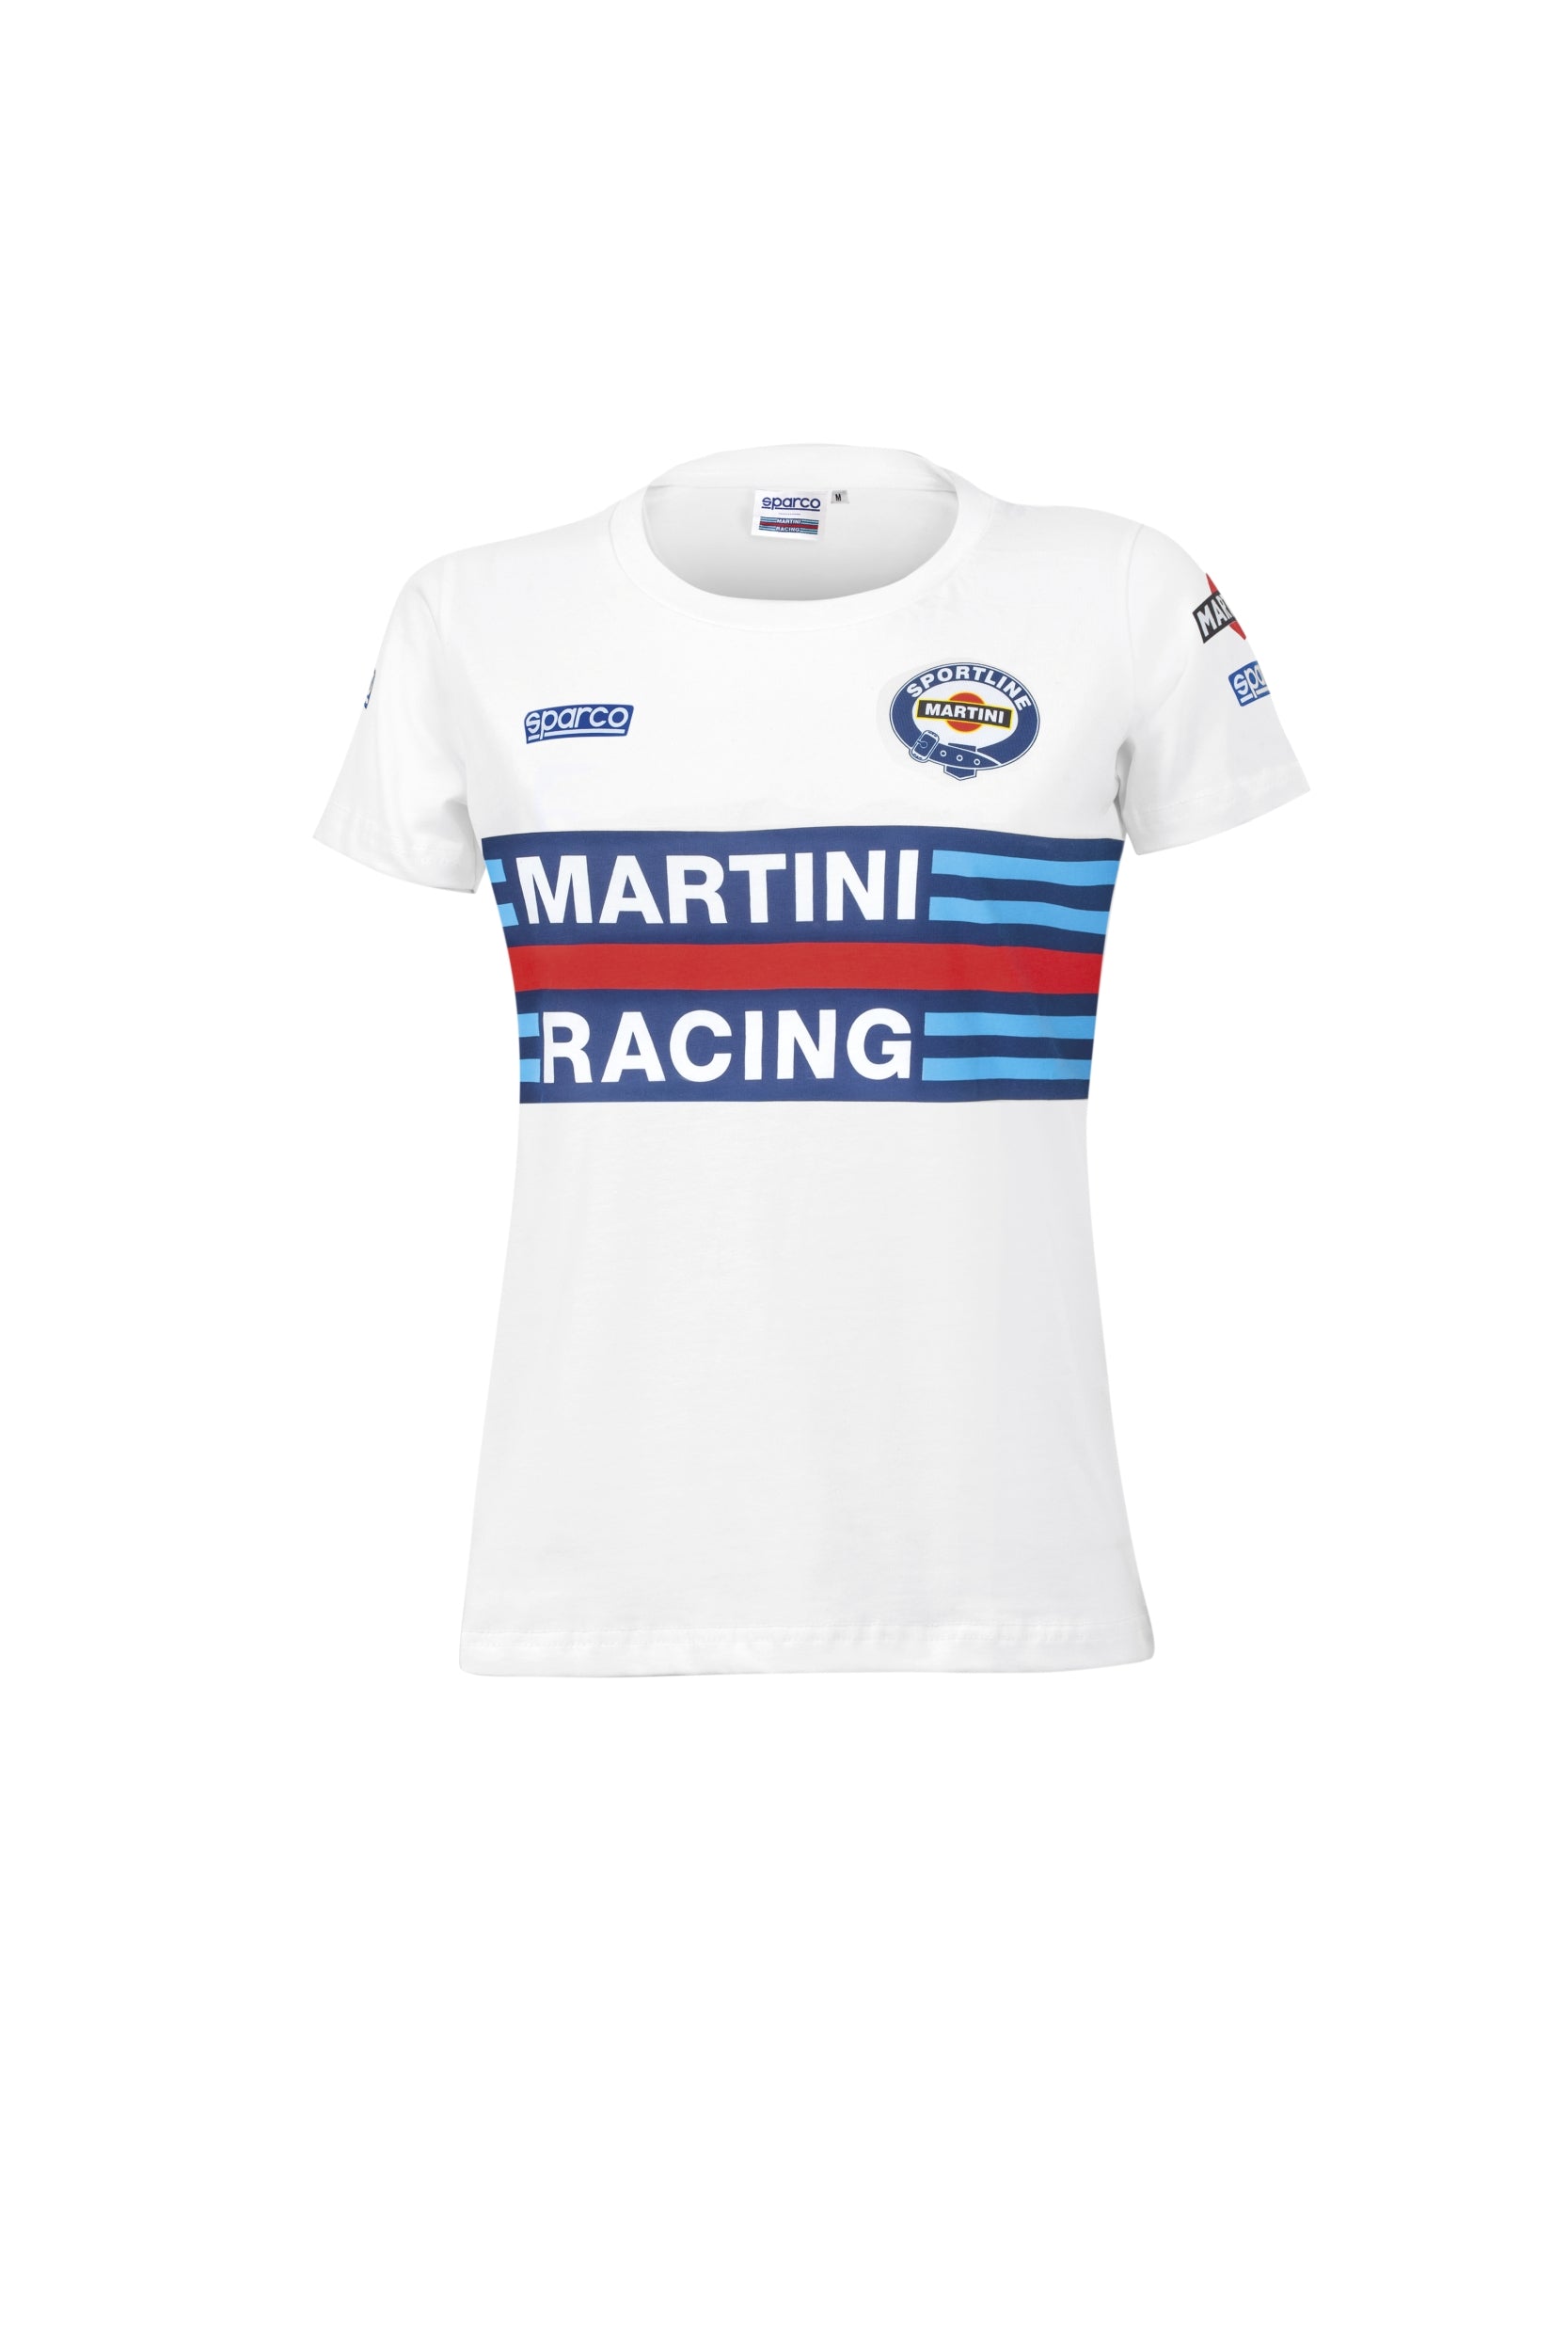 SPARCO 01398MRBI1S T-shirt MARTINI RACING Lady, white, size S Photo-0 